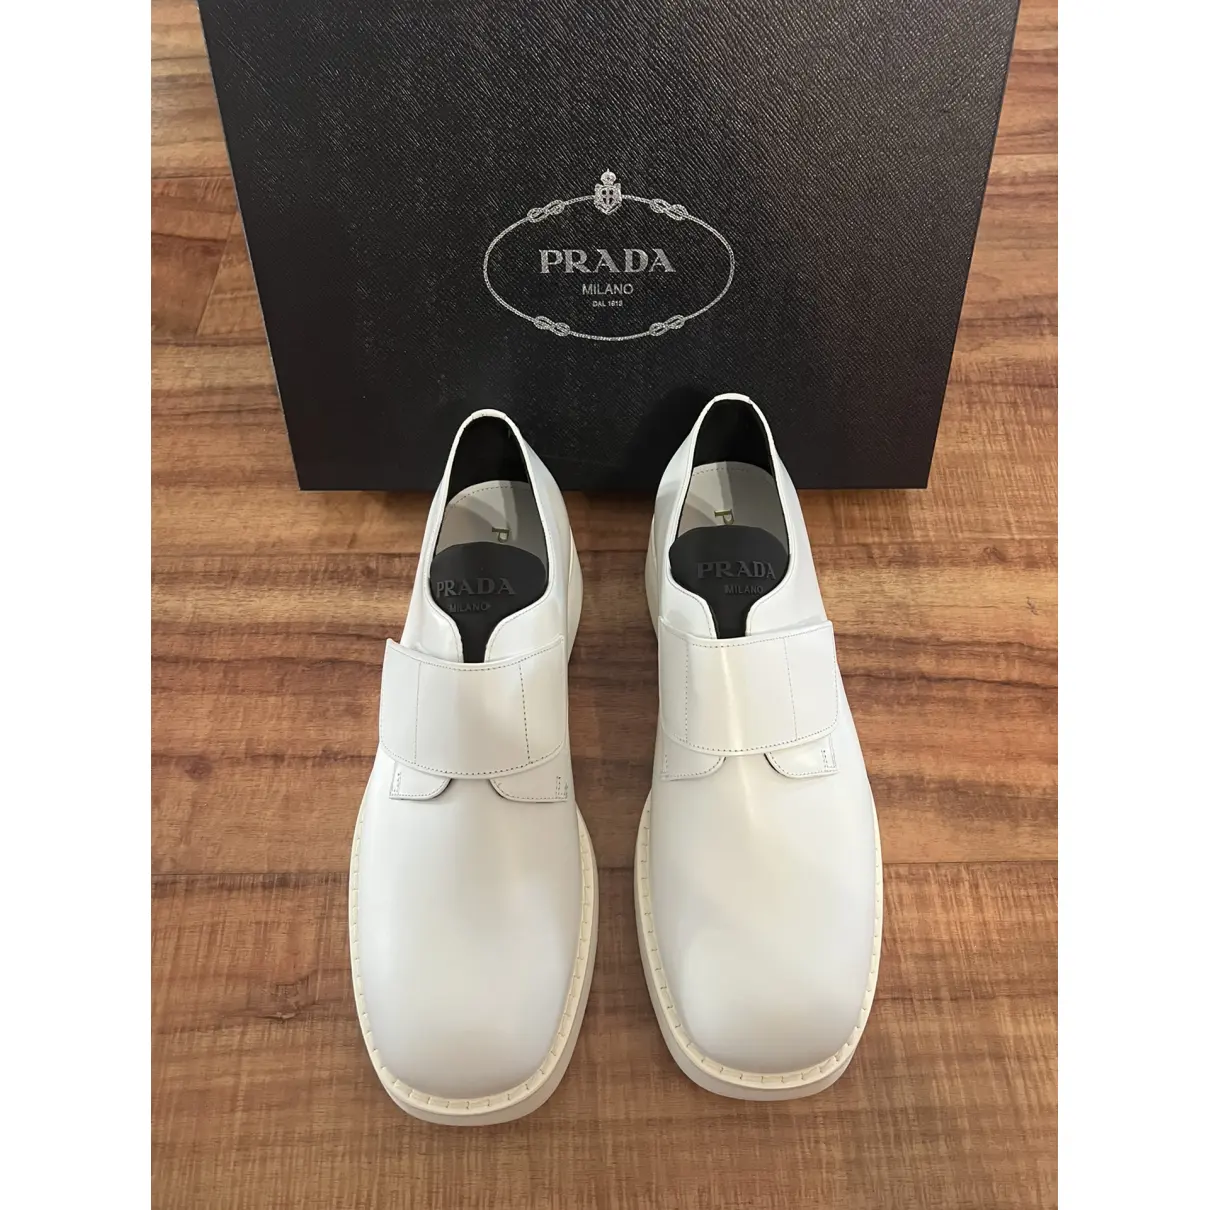 Luxury Prada Flats Men